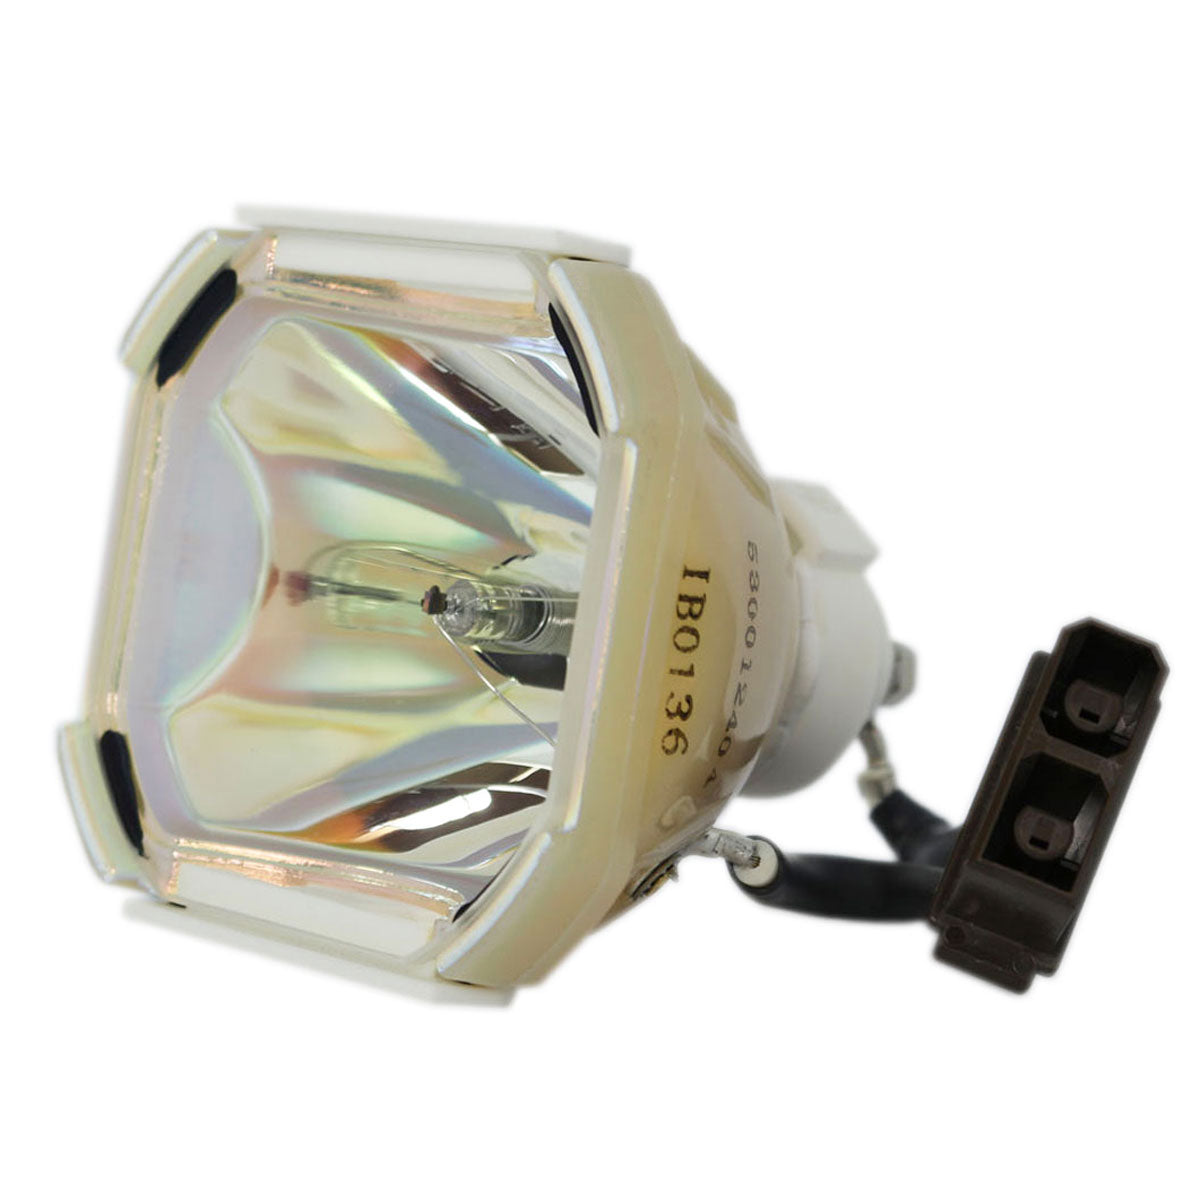 Dukane VLT-X120LP Ushio Projector Bare Lamp